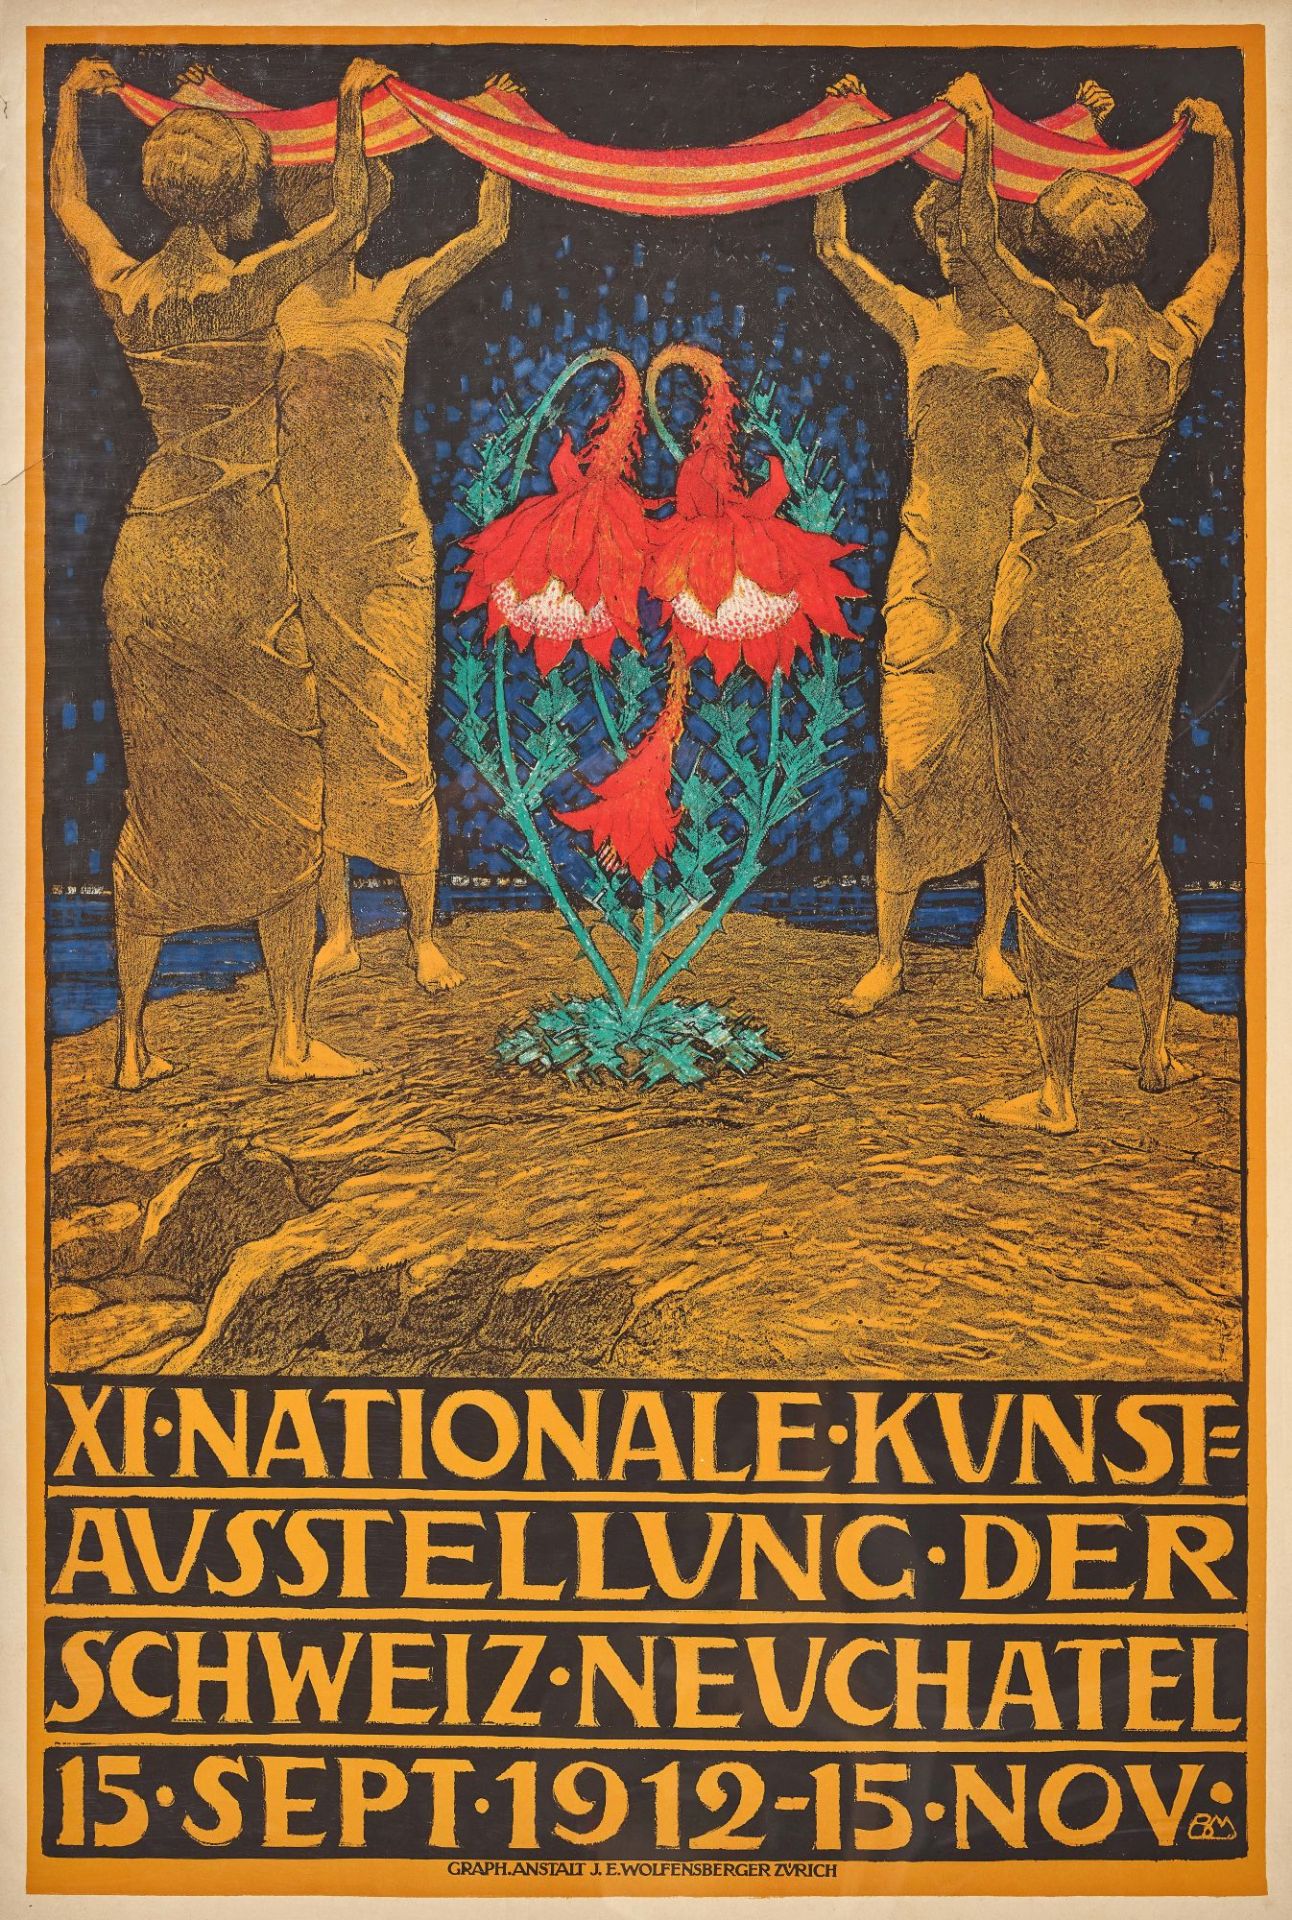 MANGOLD, BURKHARD: "XI. Nationale Kunstausstellung der Schweiz Neuchâtel 1912".